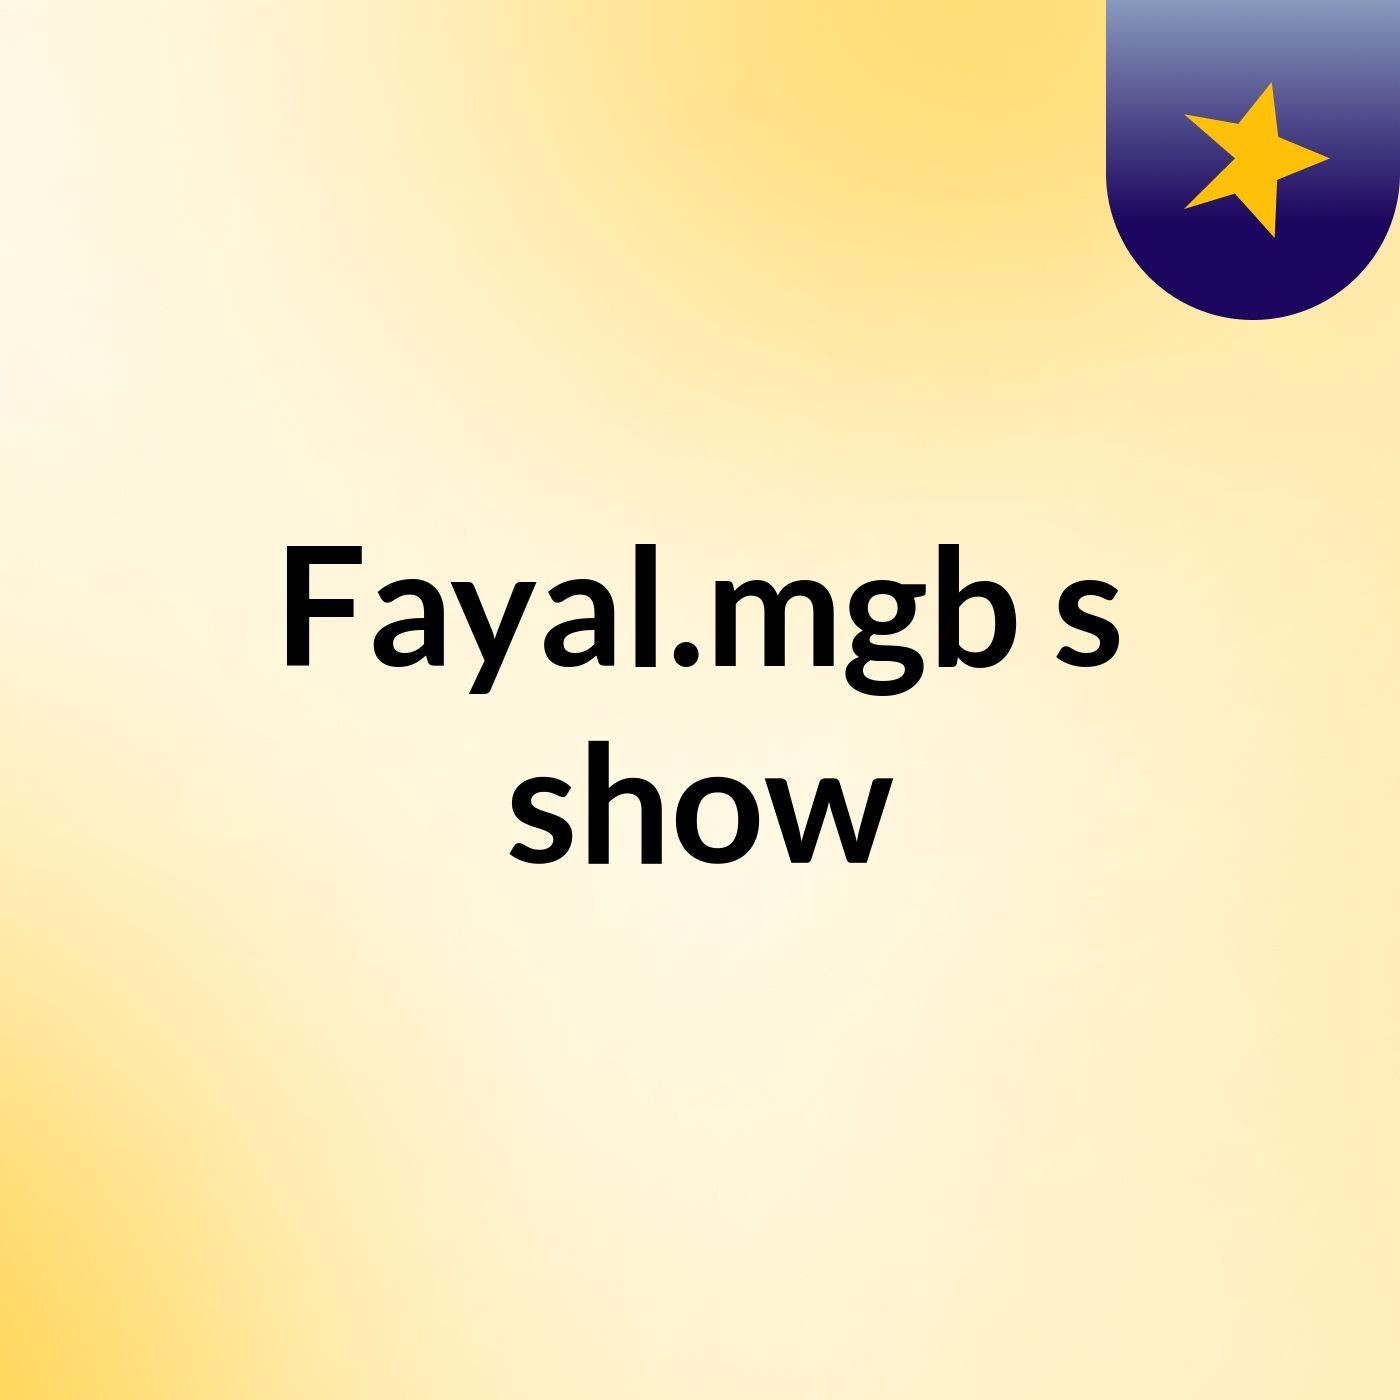 Fayal.mgb's show:Fayal.mgb